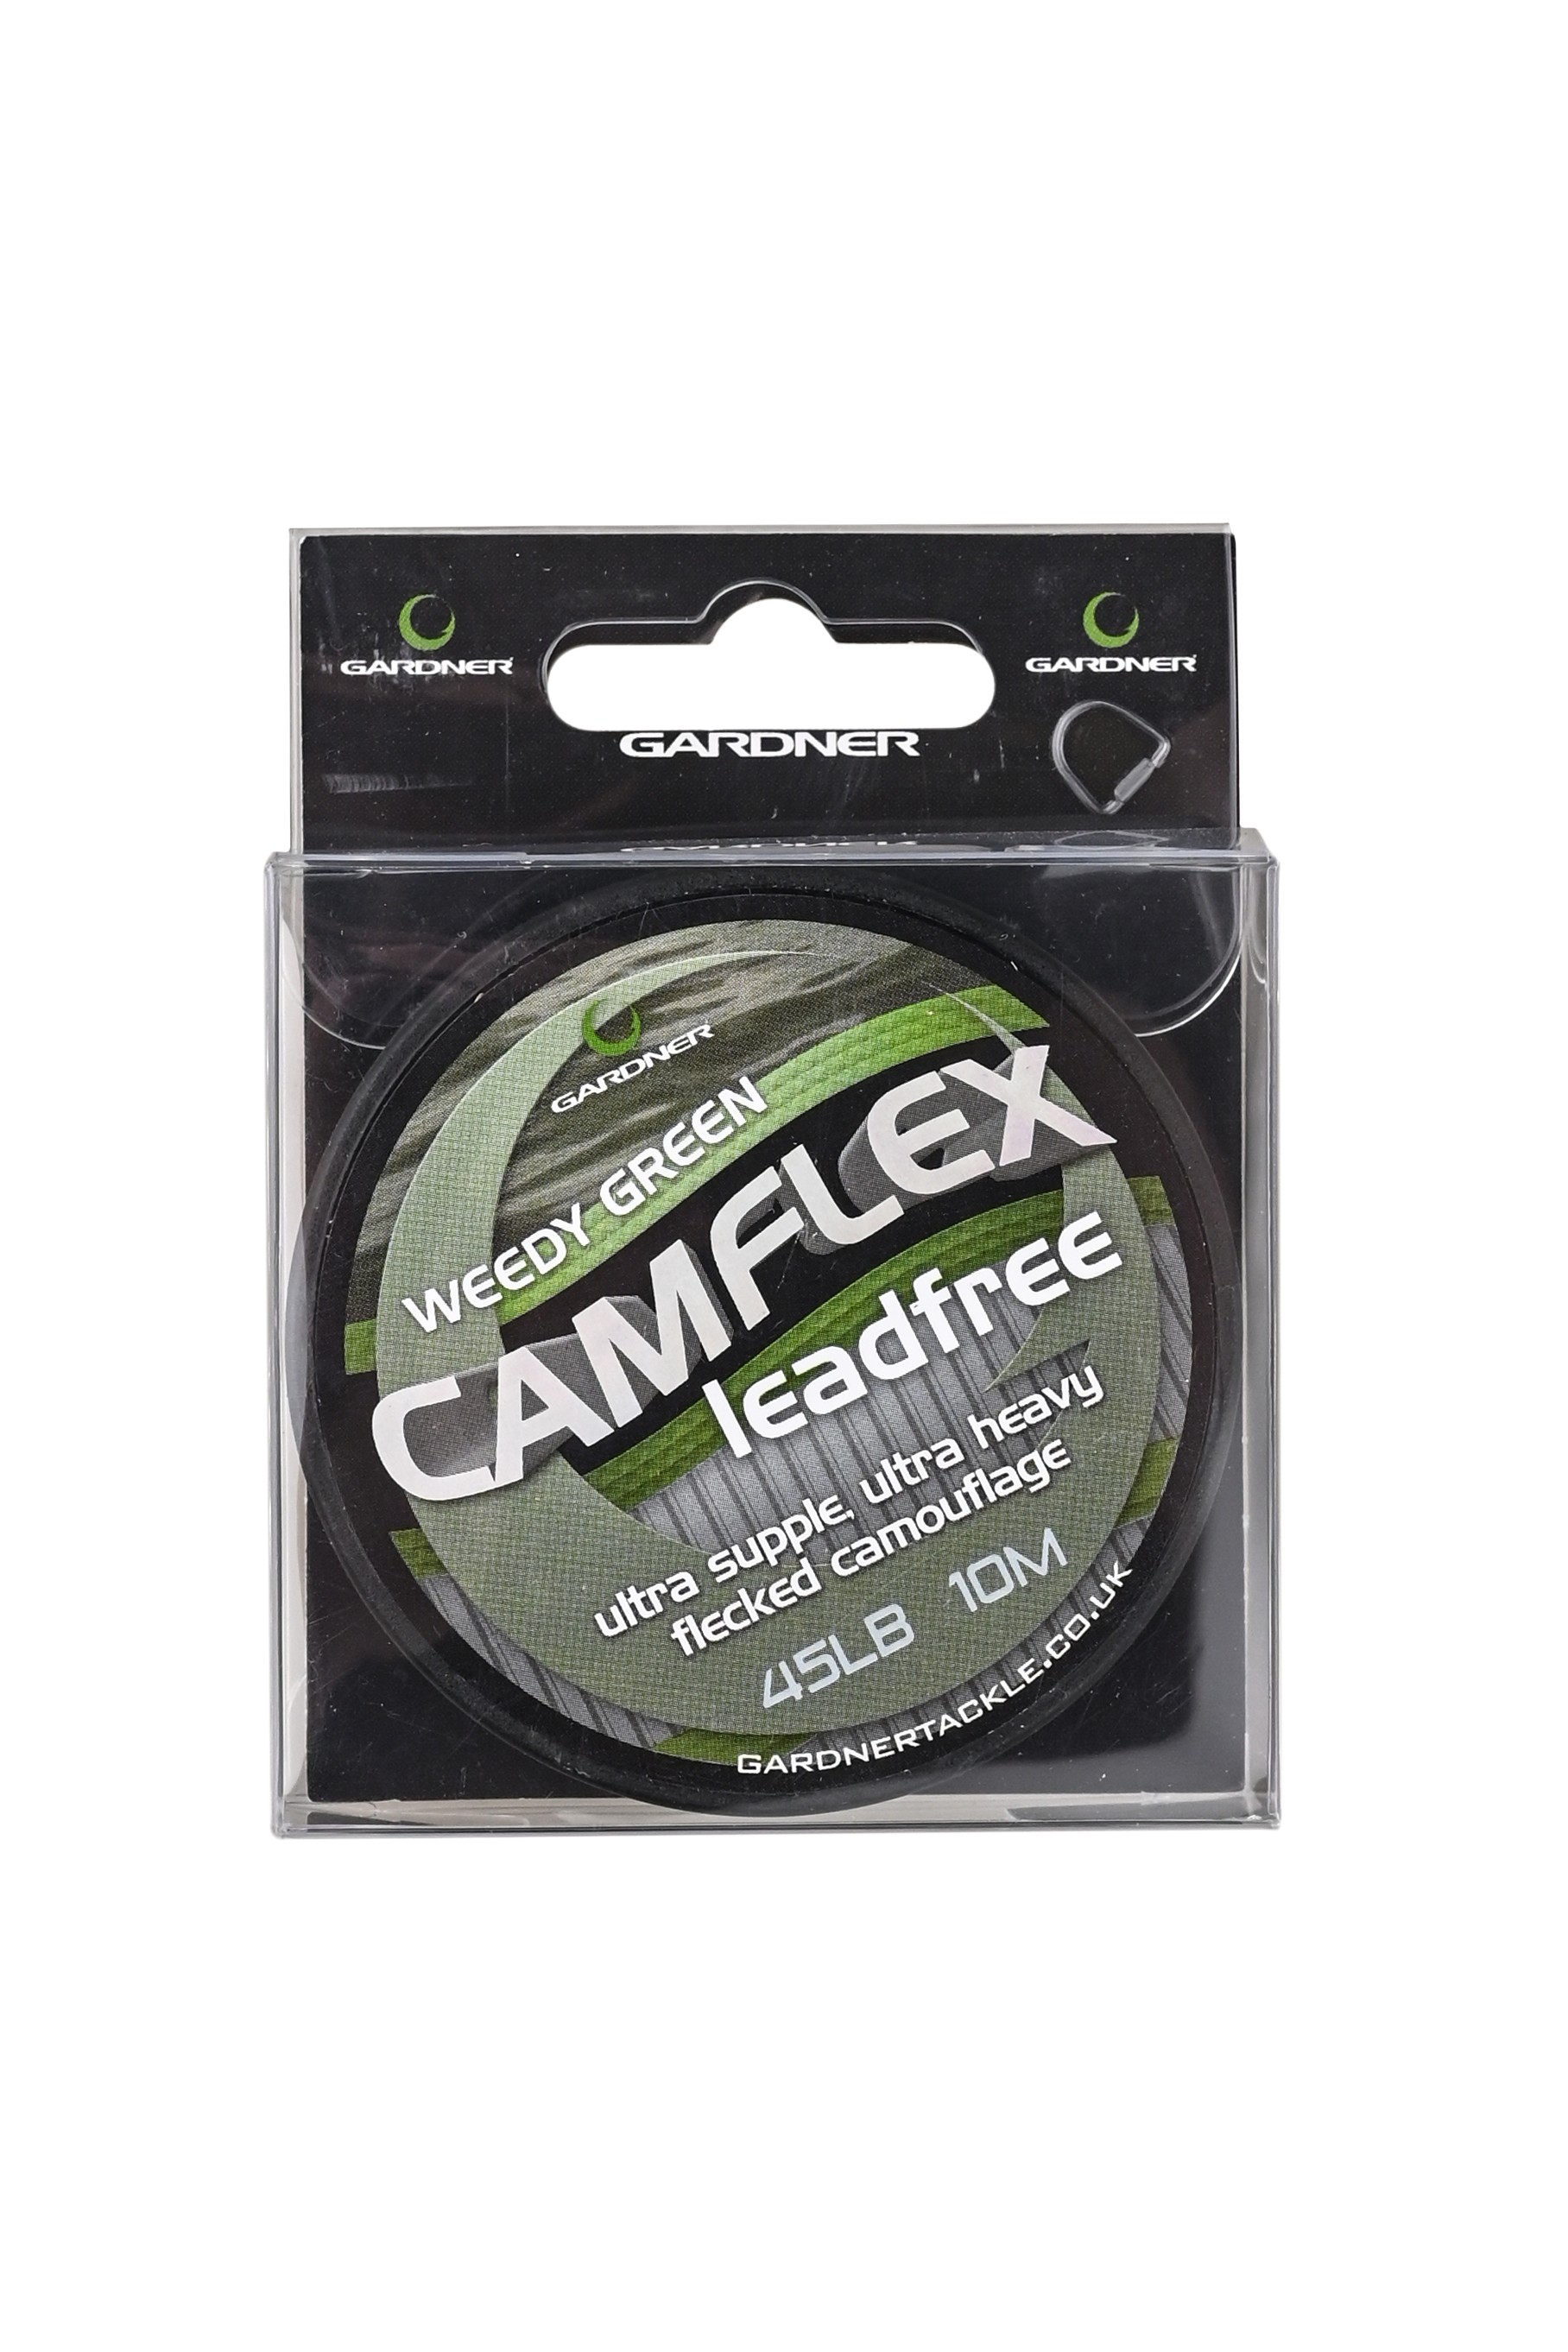 Лидкор Gardner Camflex leadfree weedy green 45lb